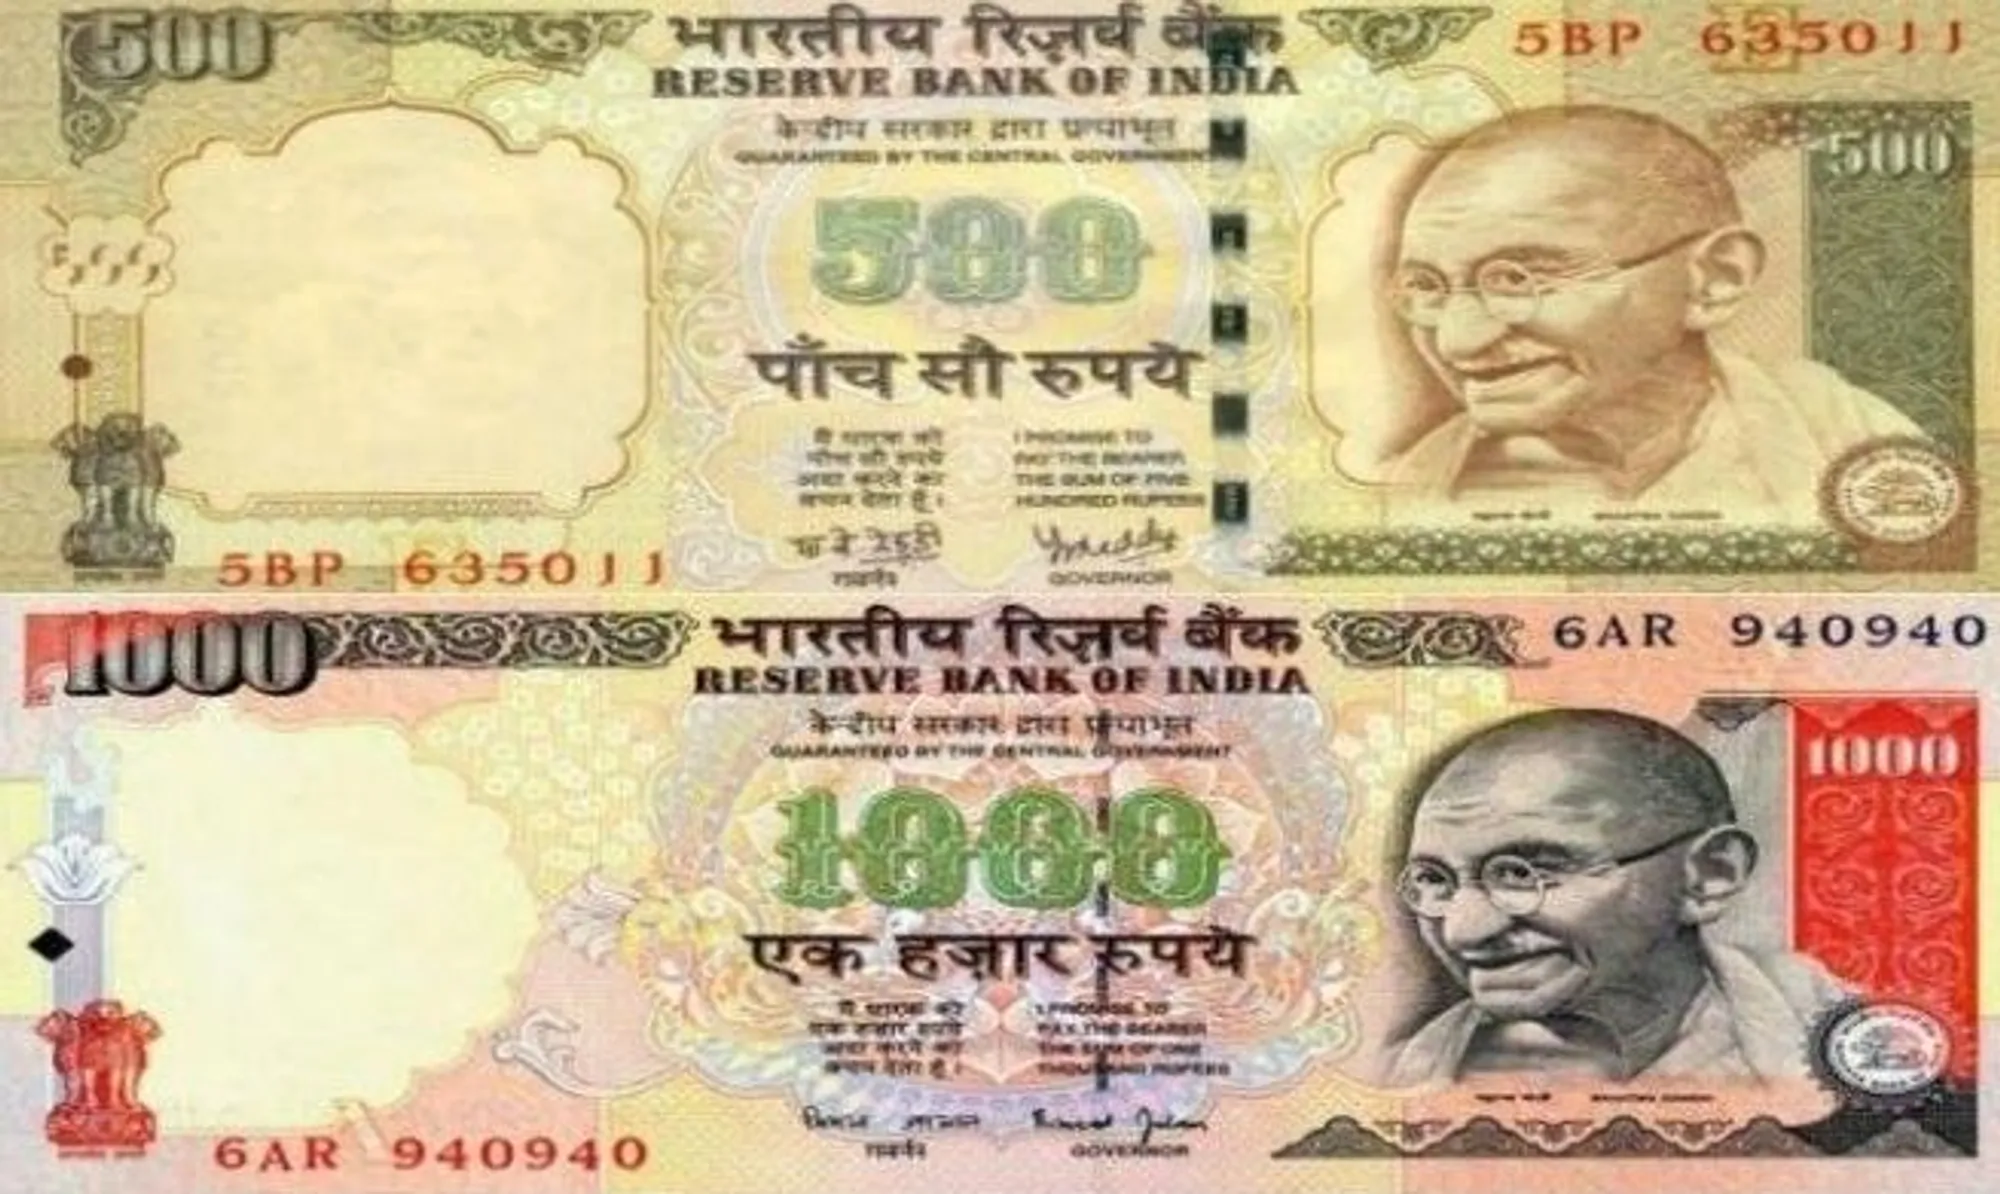 00-1000-Demonetisation-in-India-to-eradicate-black-money